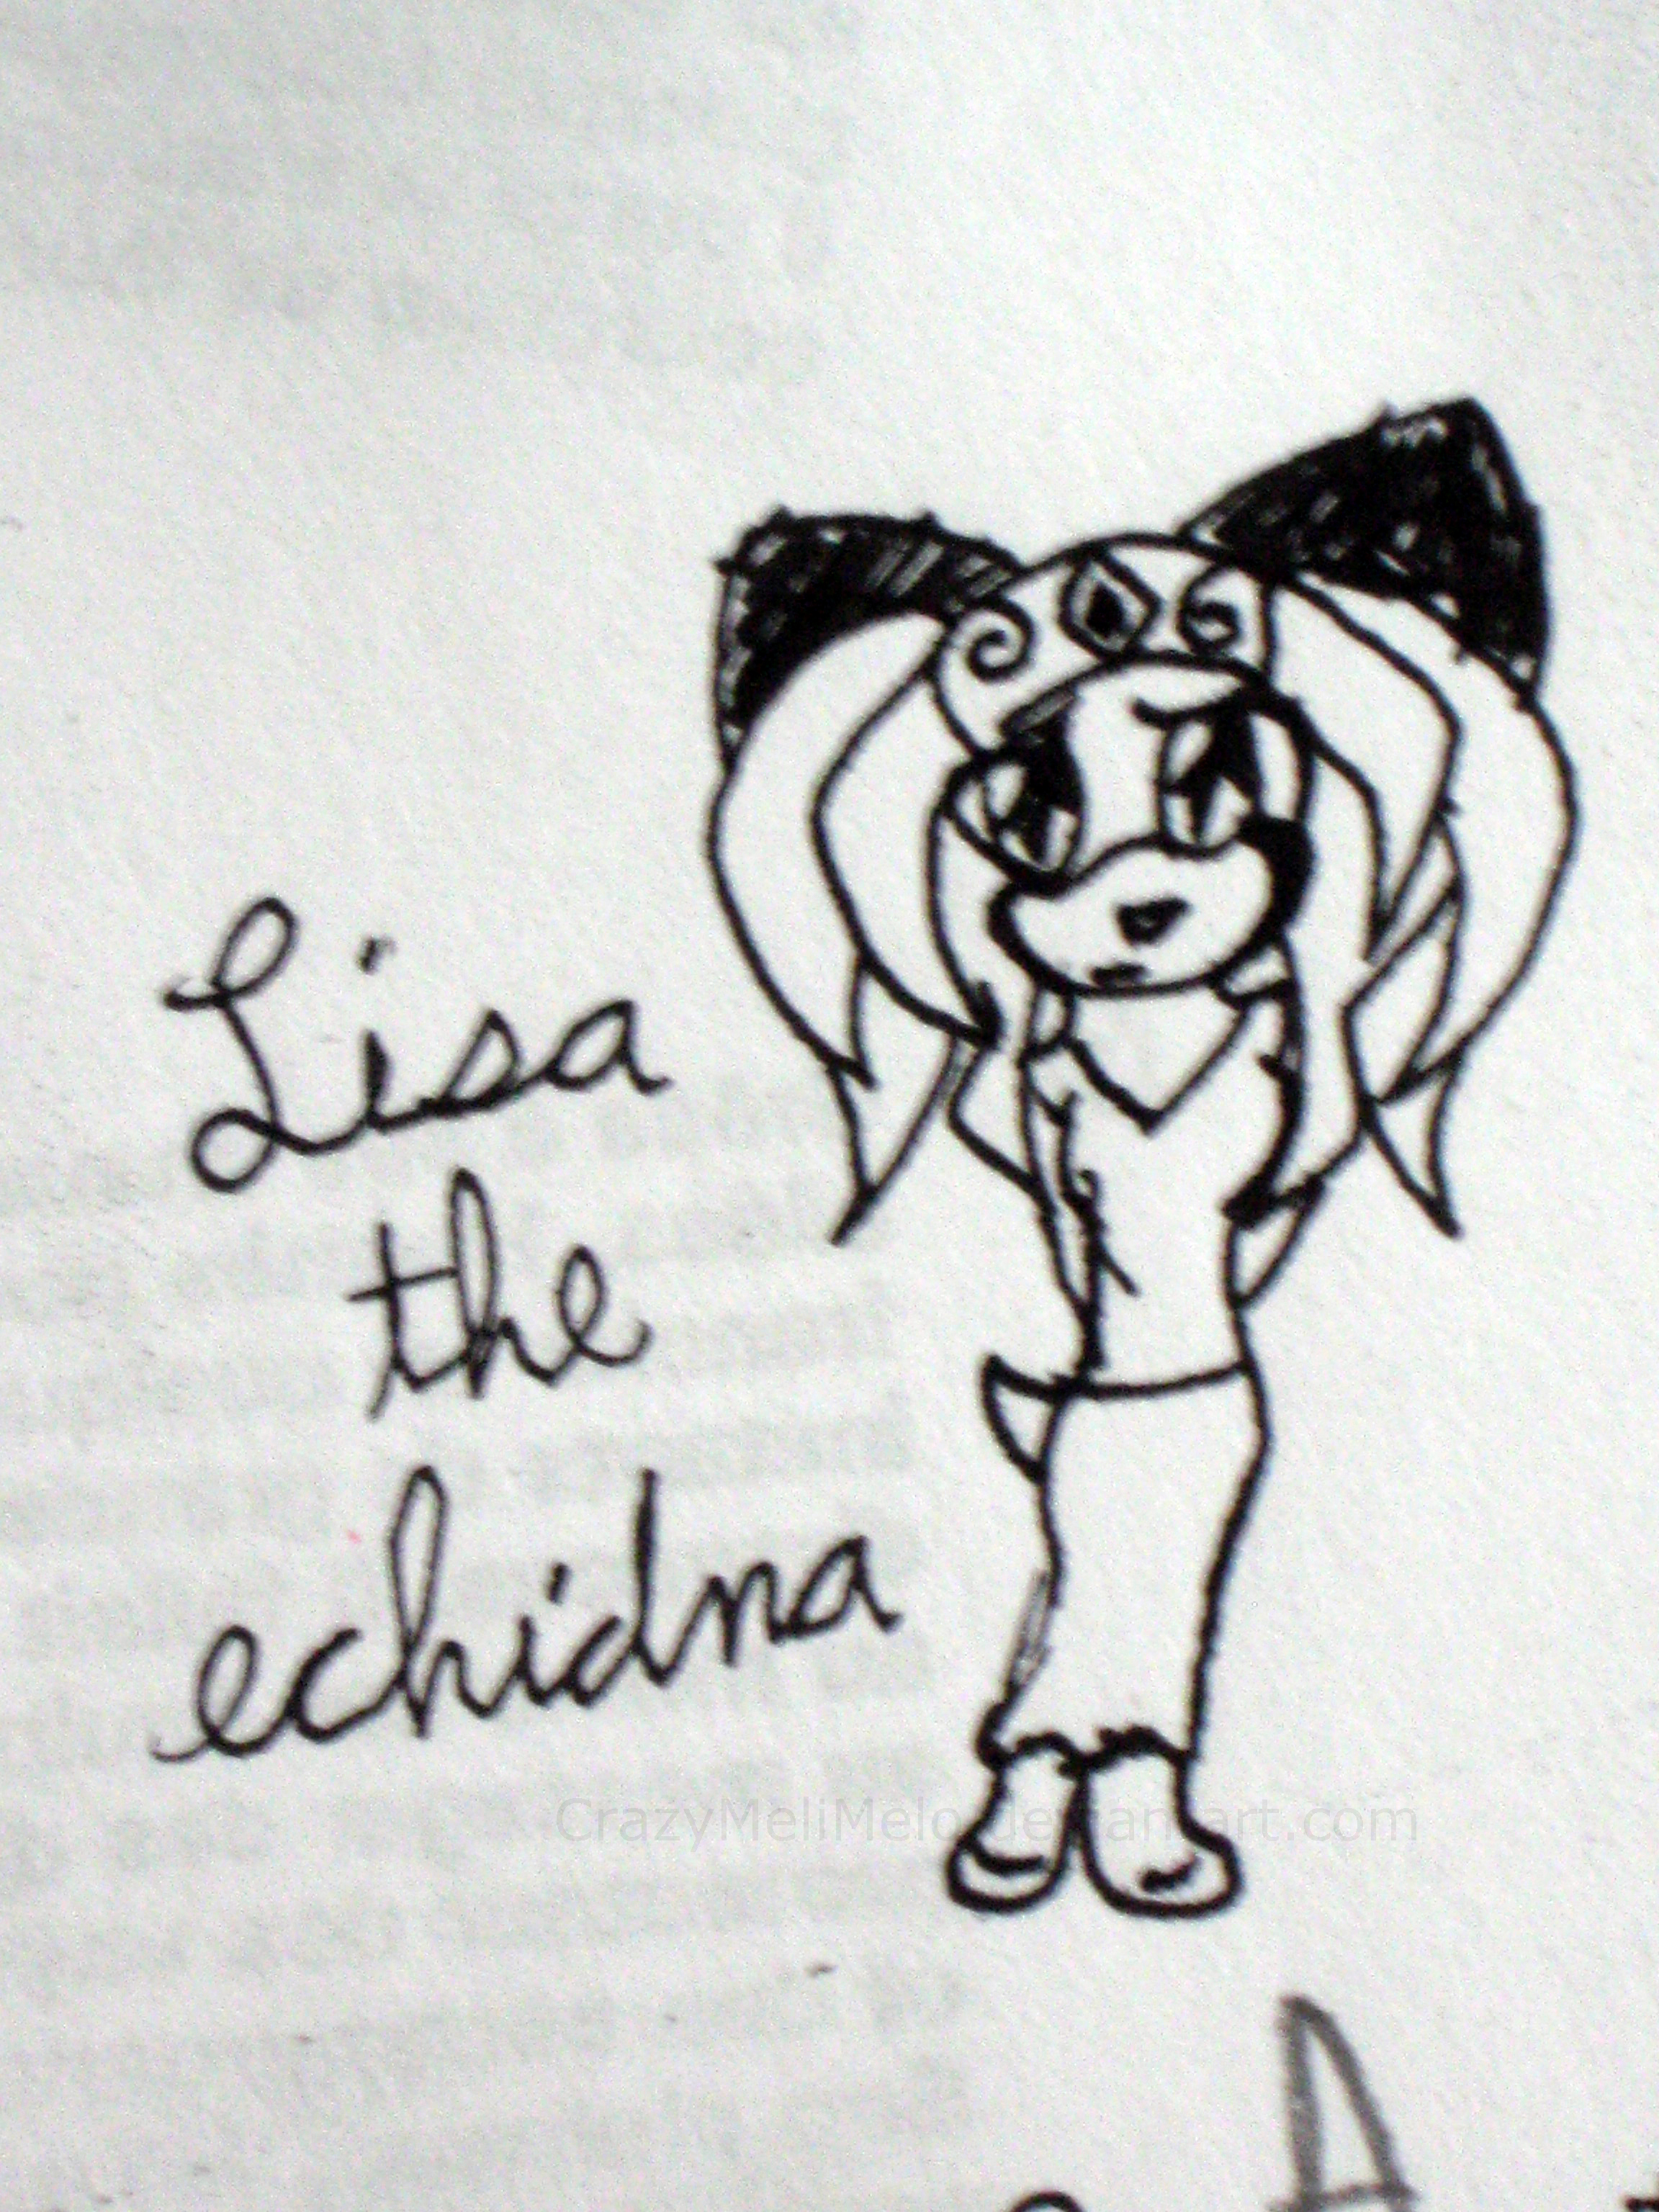 Lisa the echidna